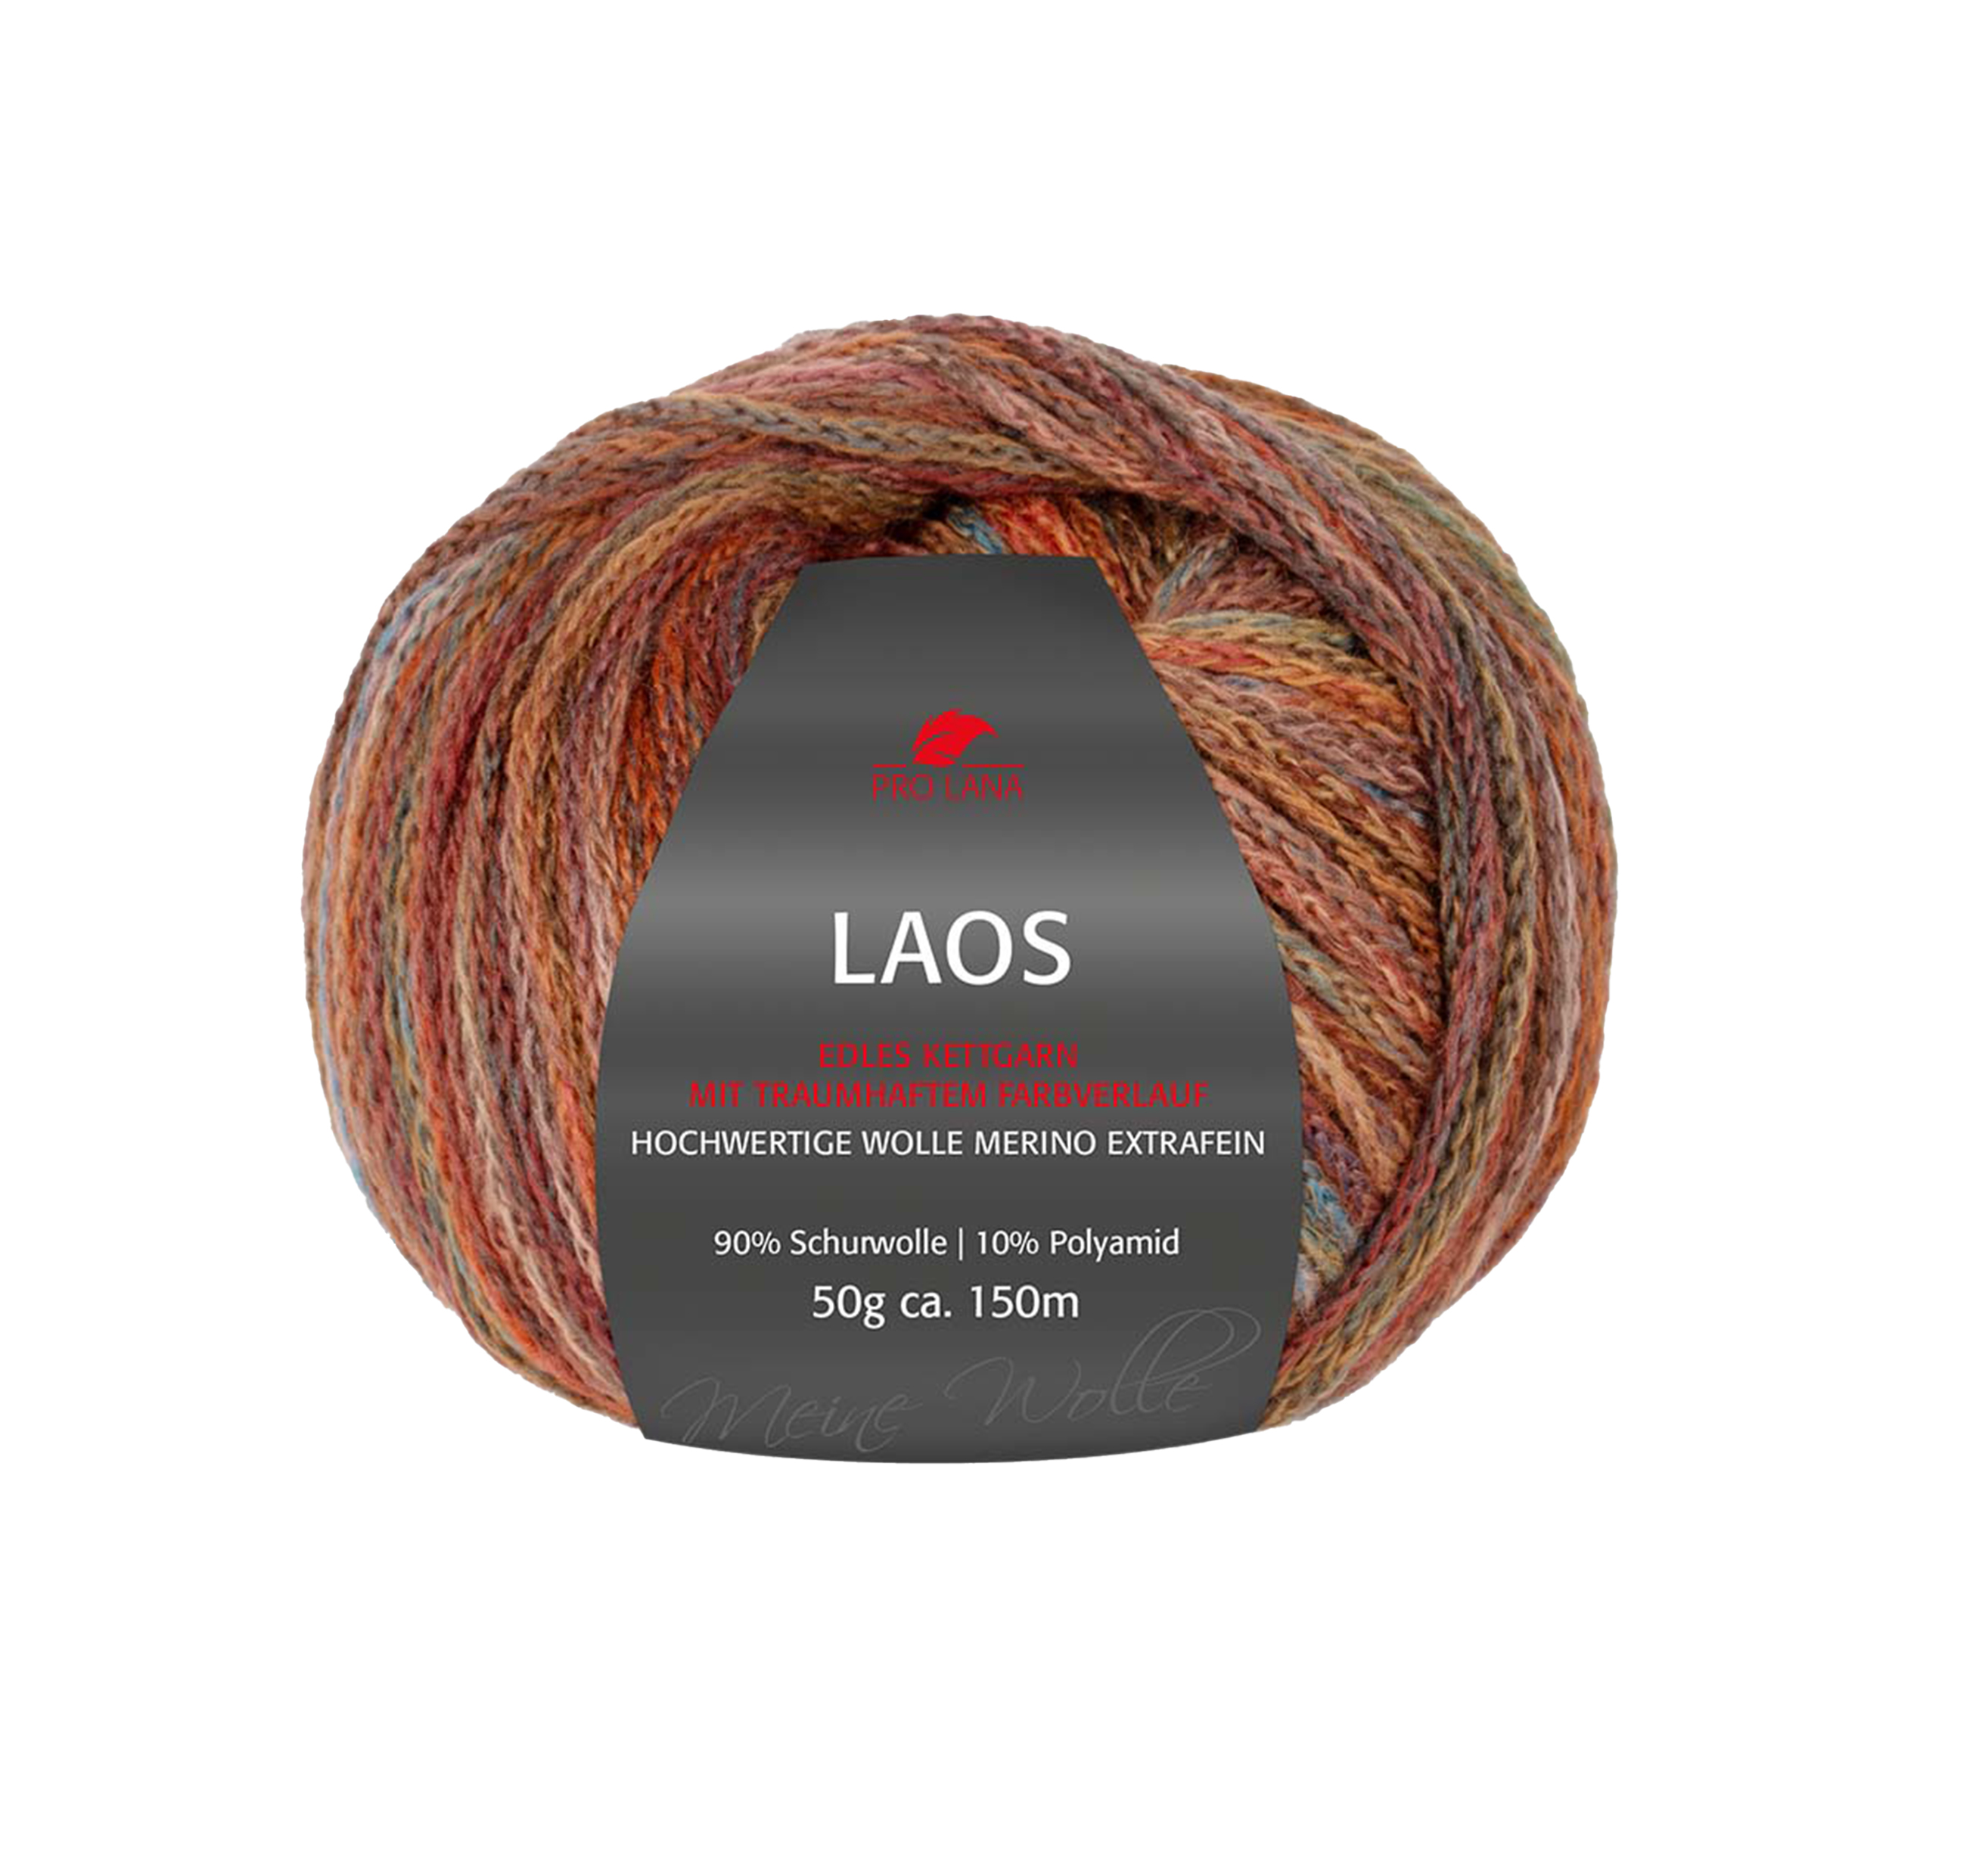 Laos herbst